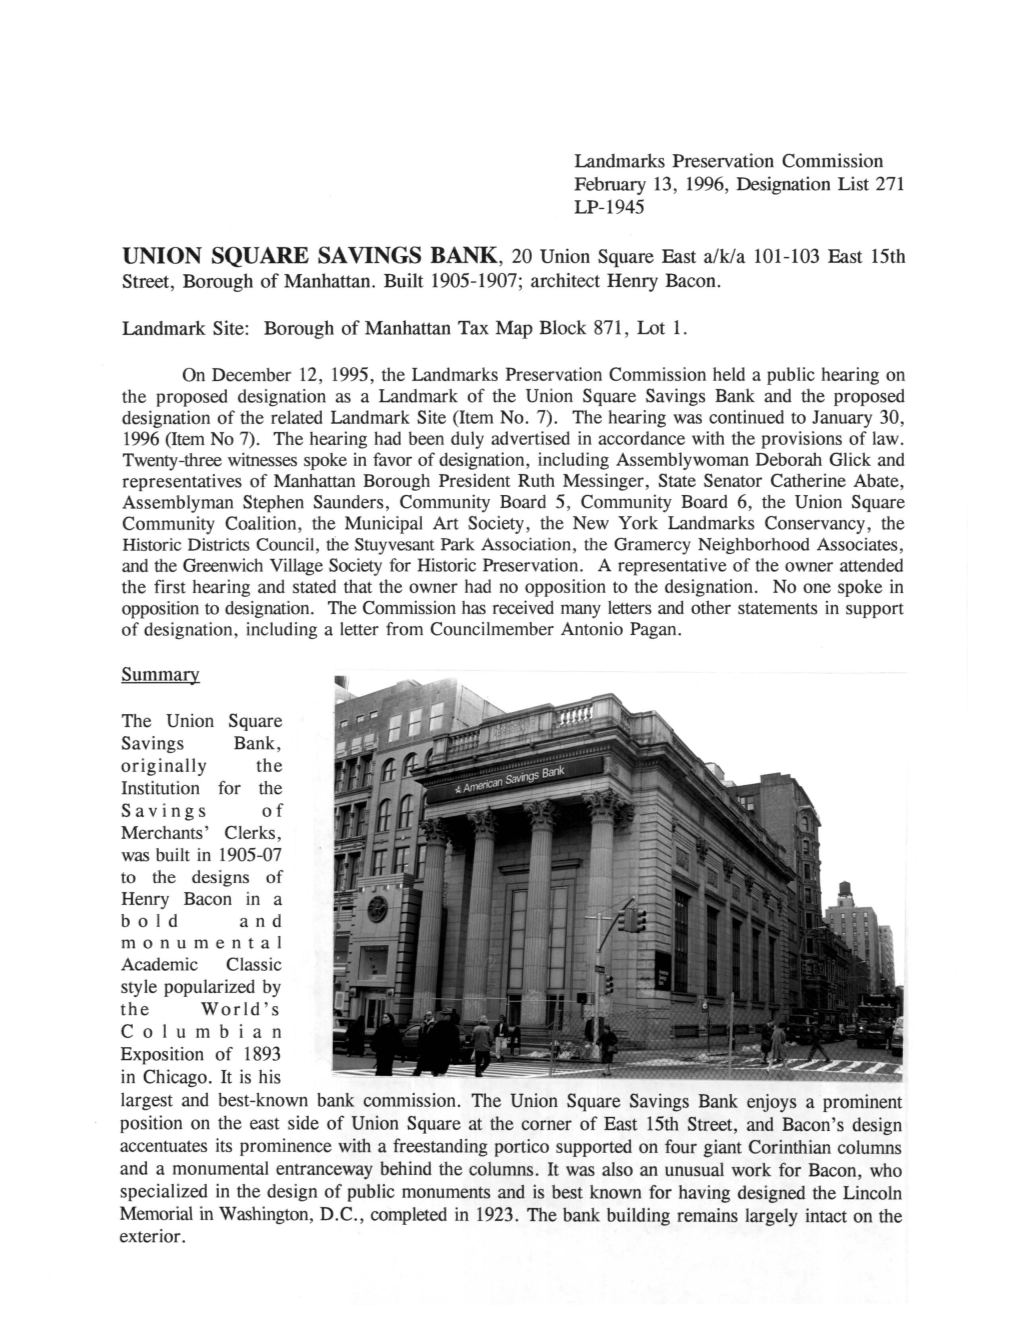 UNION SQUARE SAVINGS BANK, 20 Union Square East A/K/A 101-103 East 15Th Street, Borough of Manhattan